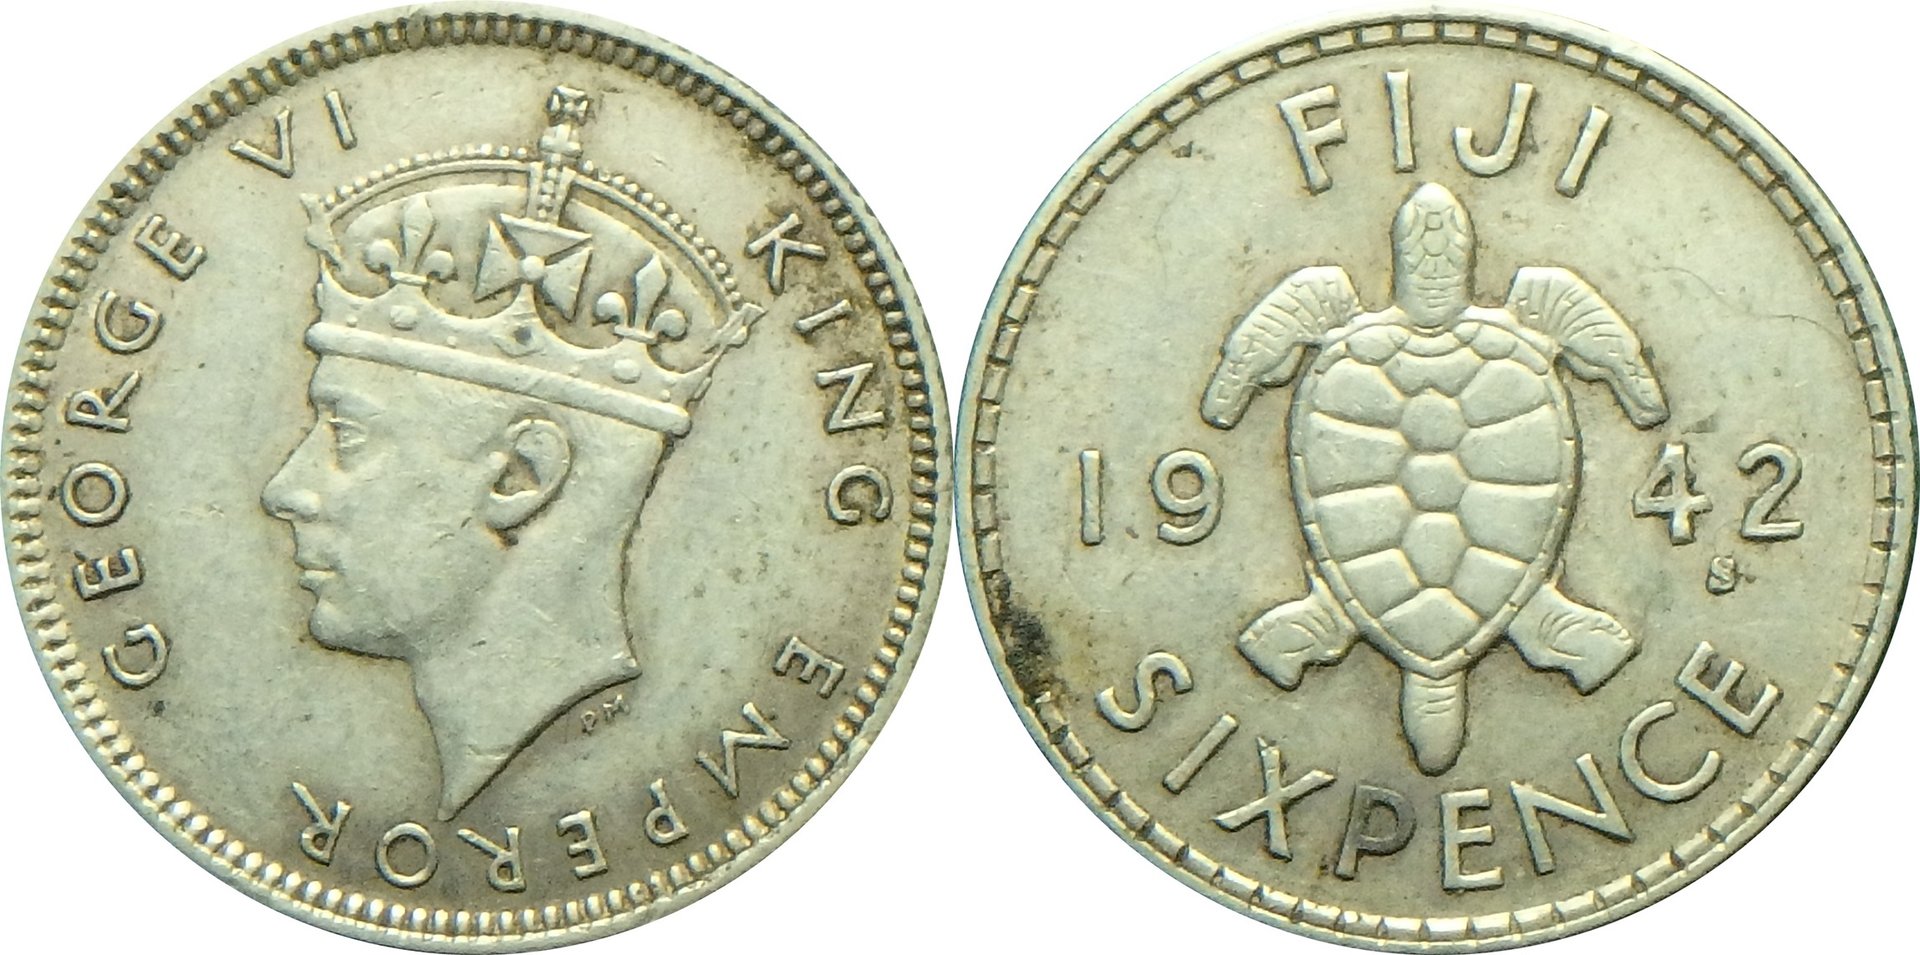 1942 S Fiji 6 p.jpg